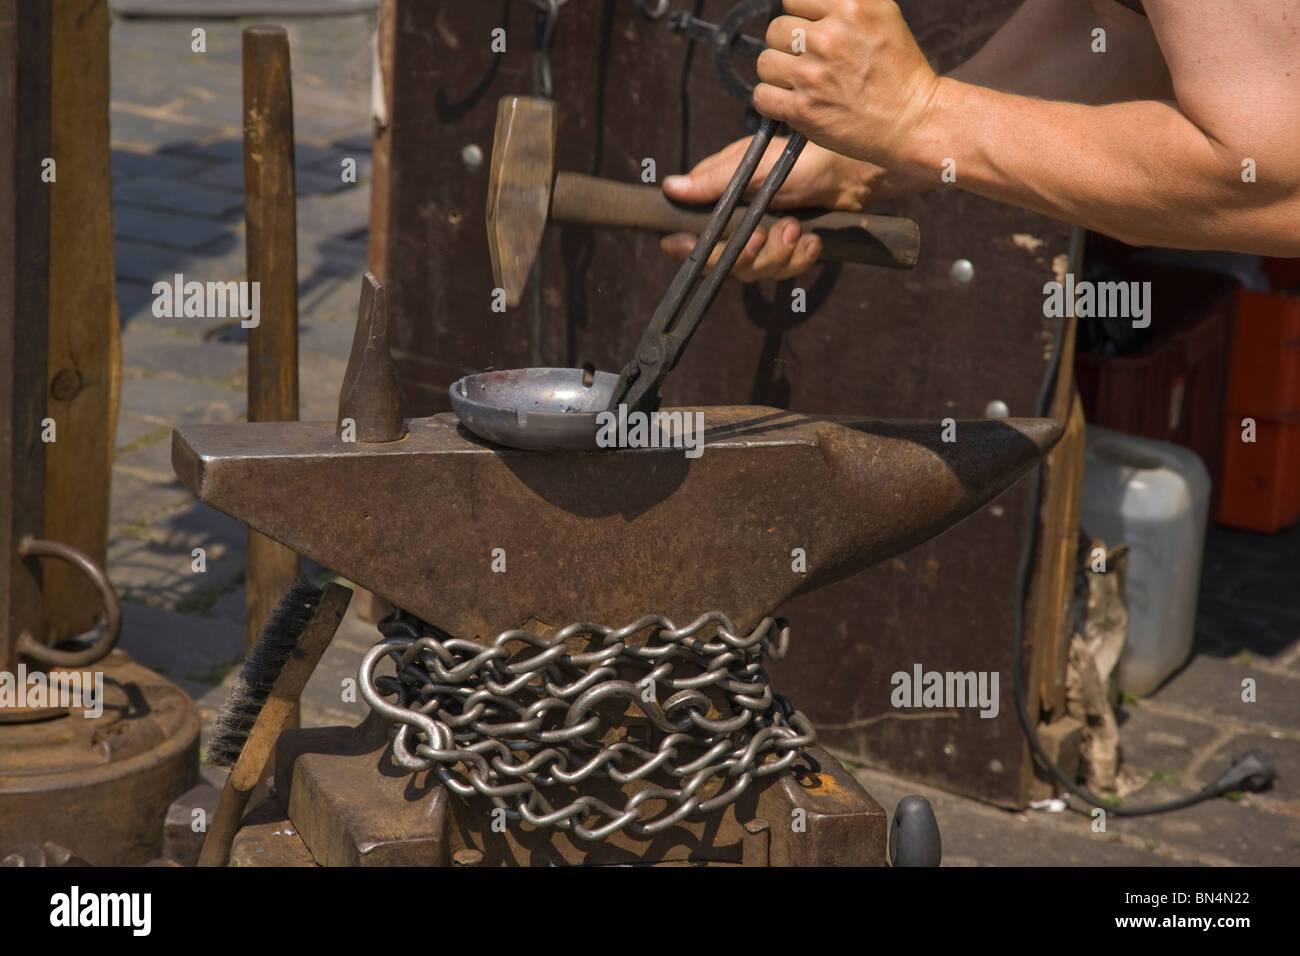 Blacksmith or metal worker hammering the metal Stock Photo